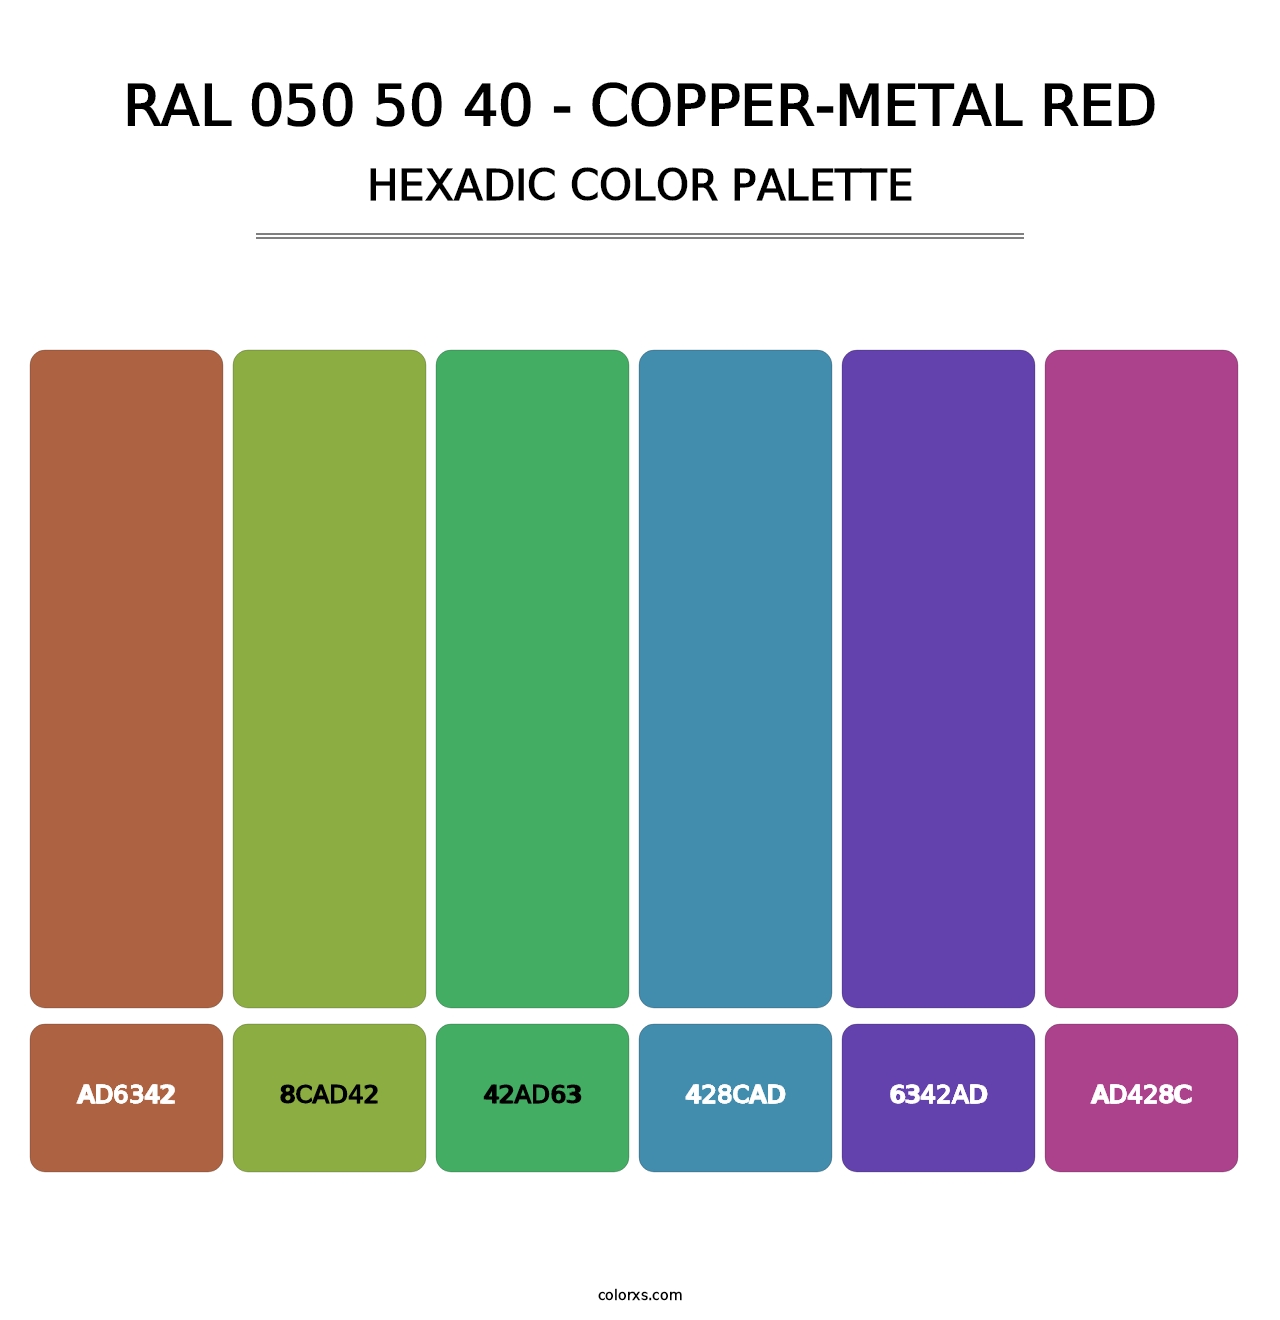 RAL 050 50 40 - Copper-Metal Red - Hexadic Color Palette